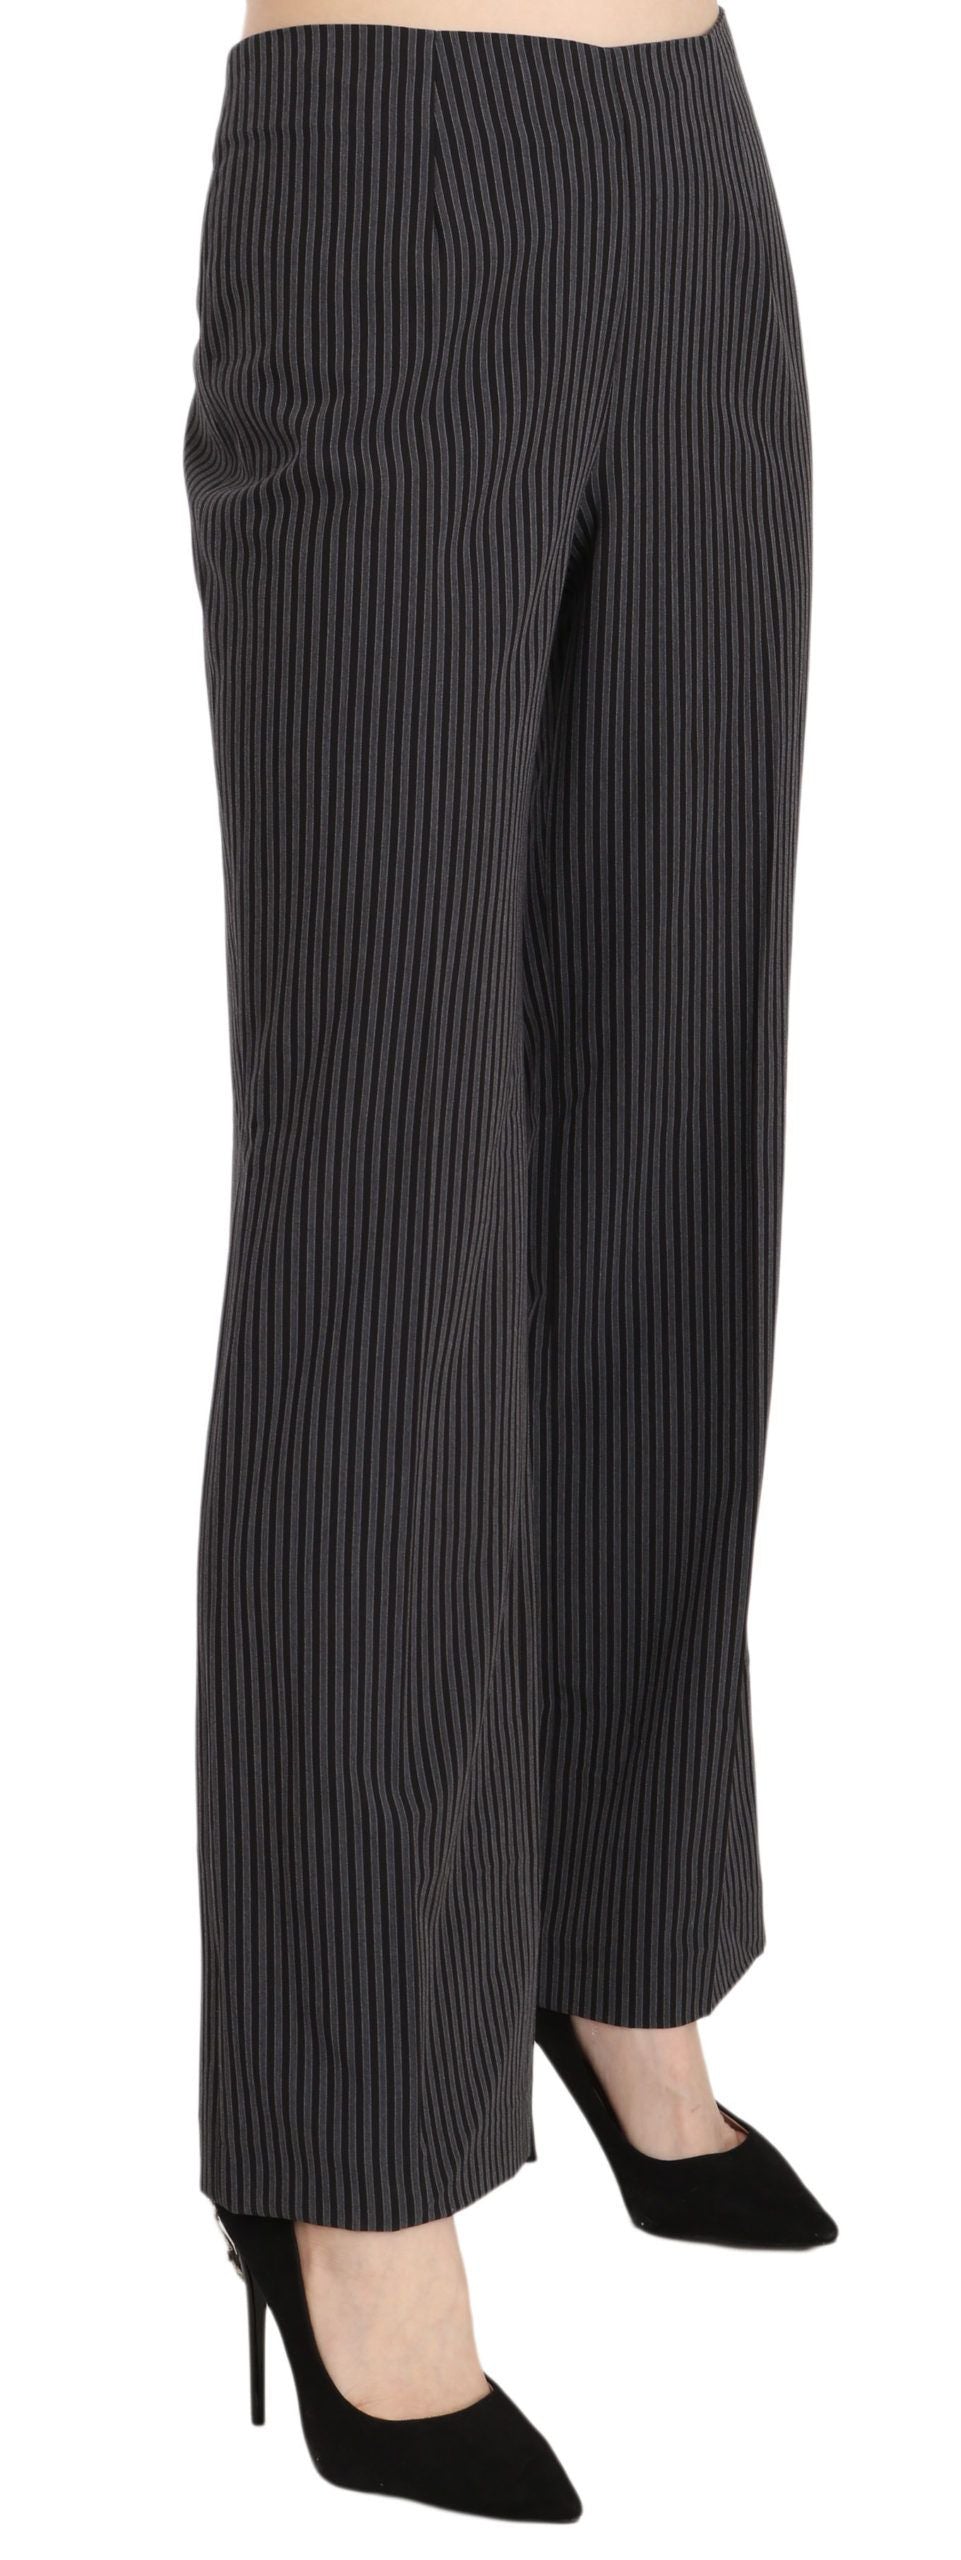 BENCIVENGA Black Striped Cotton Sretch Dress Trousers Pants